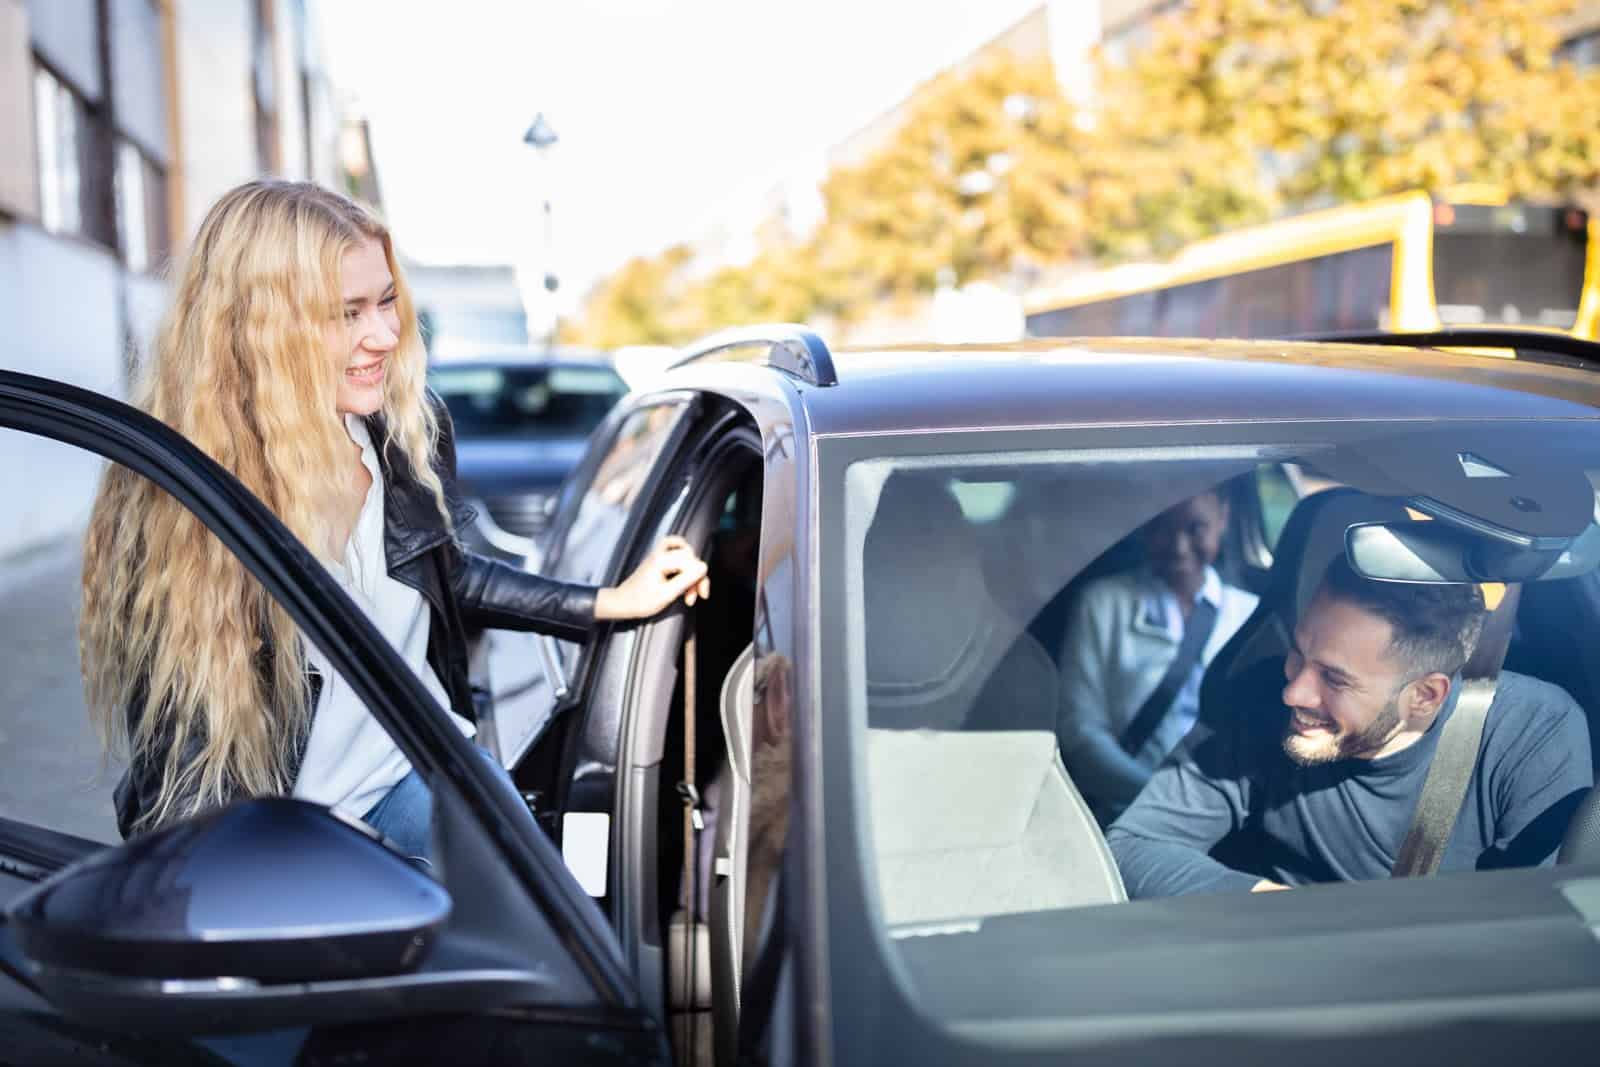 BlaBlaCar: A woman gets into a shared car